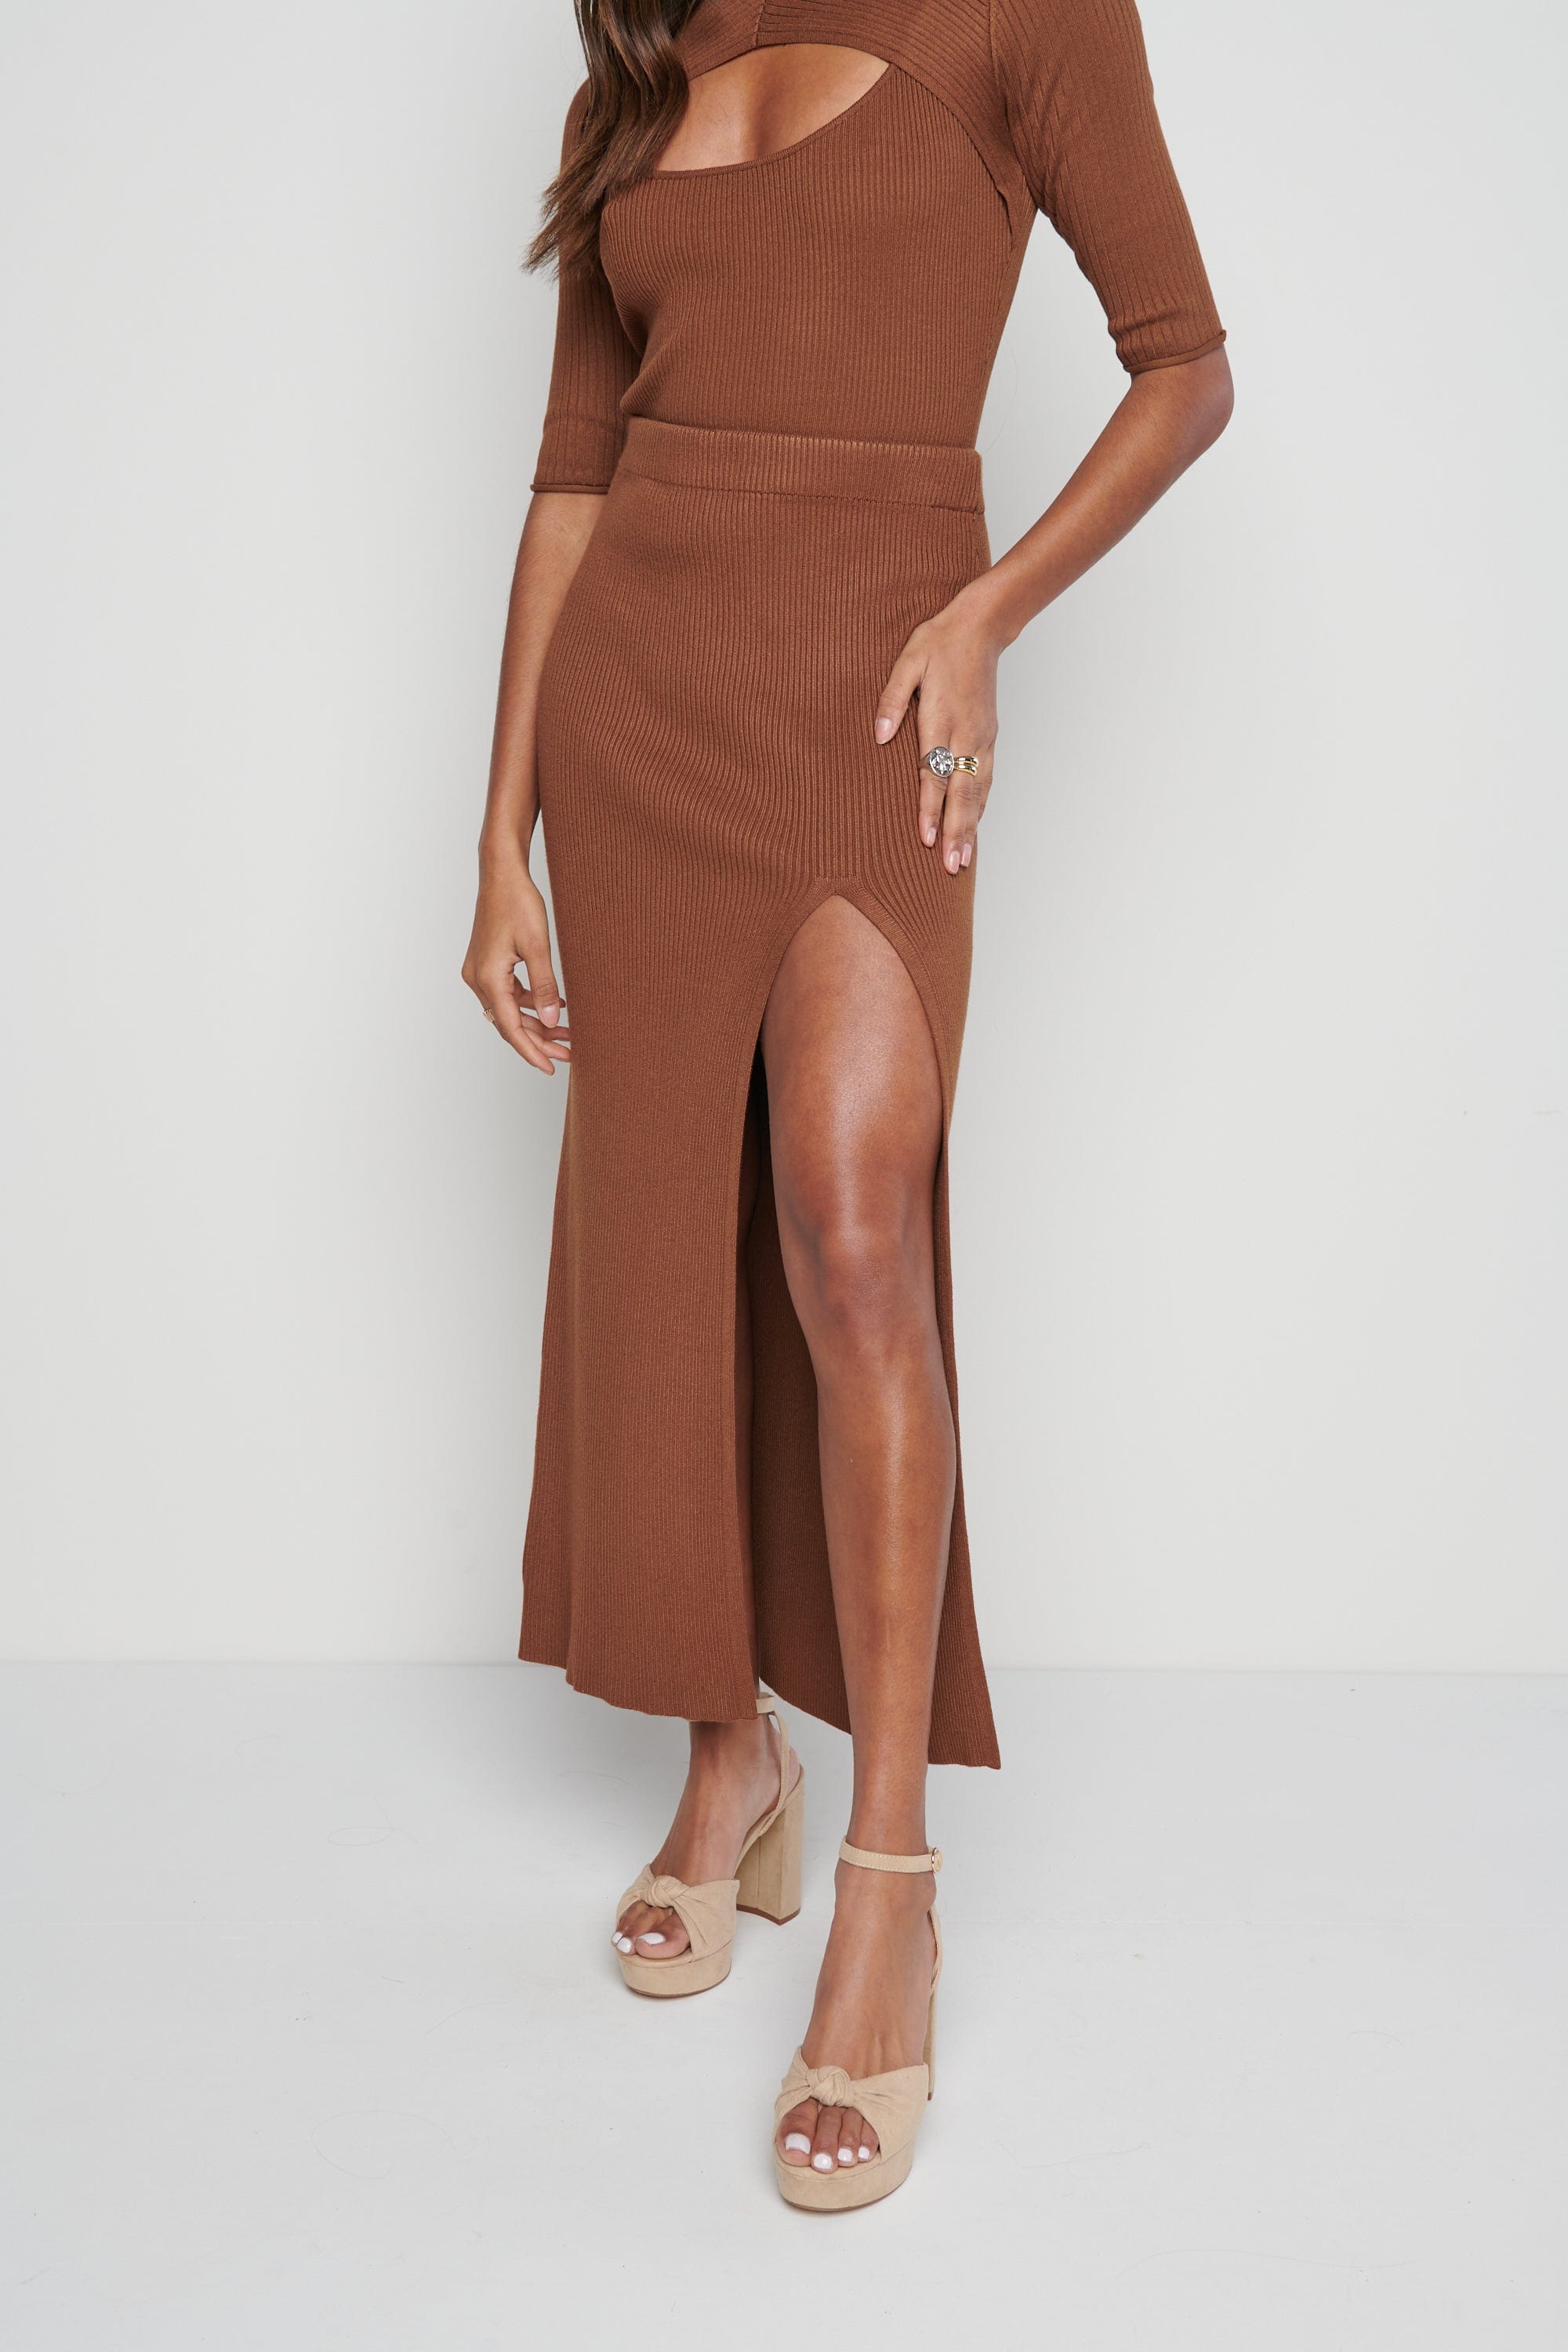 Serena Knit Skirt - Brown, XXL